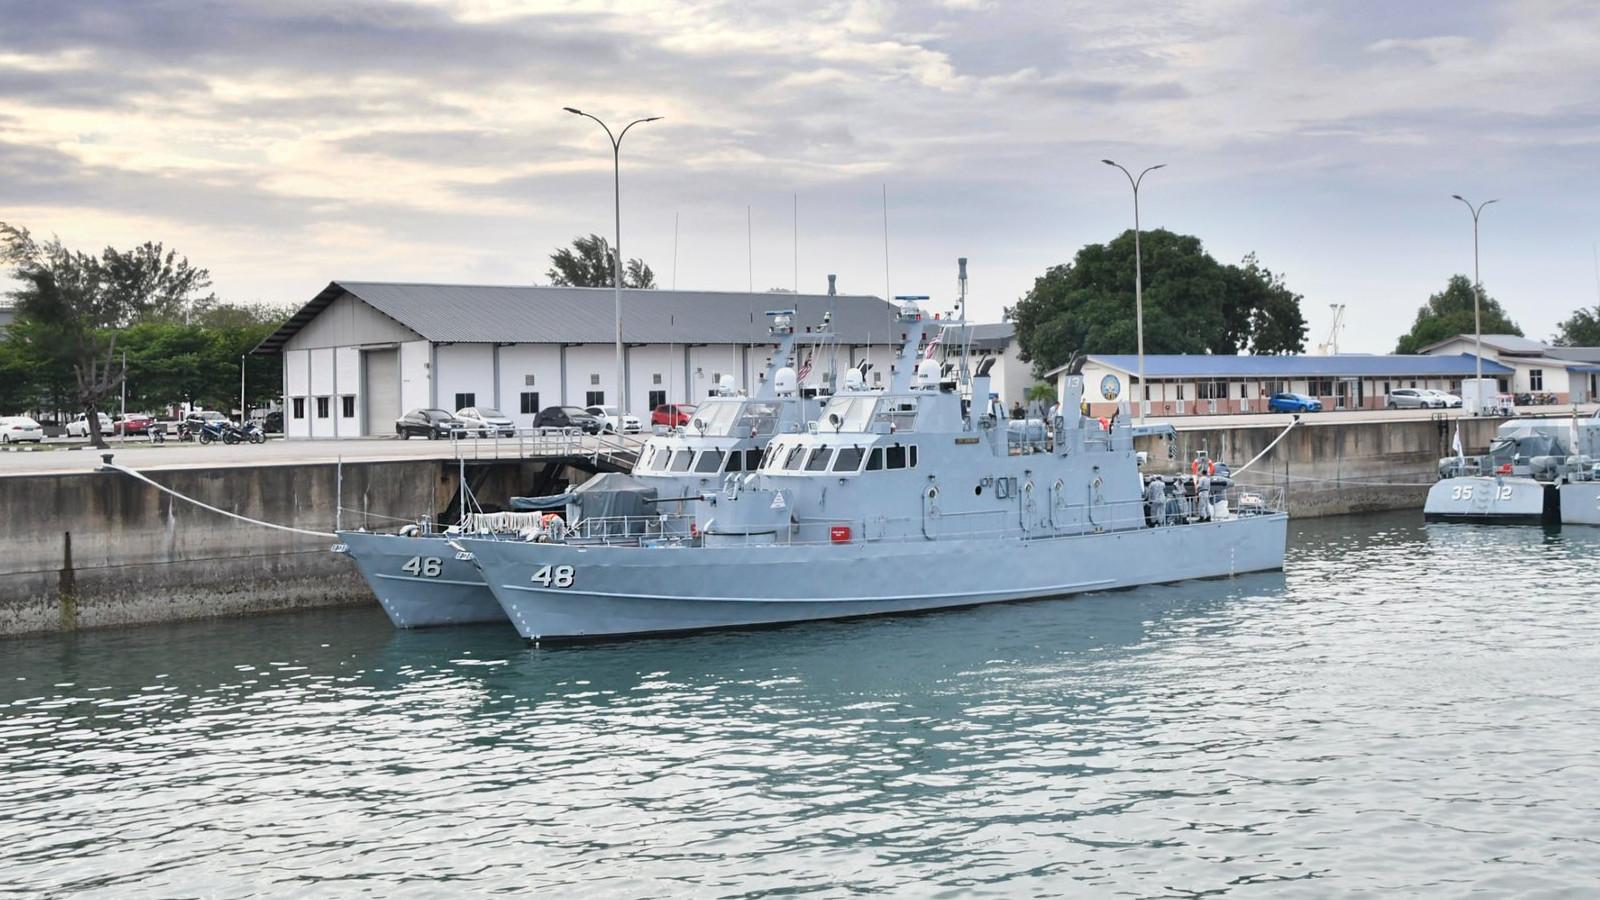 RMN Recommissions Two Upgraded Keris-class Patrol Crafts